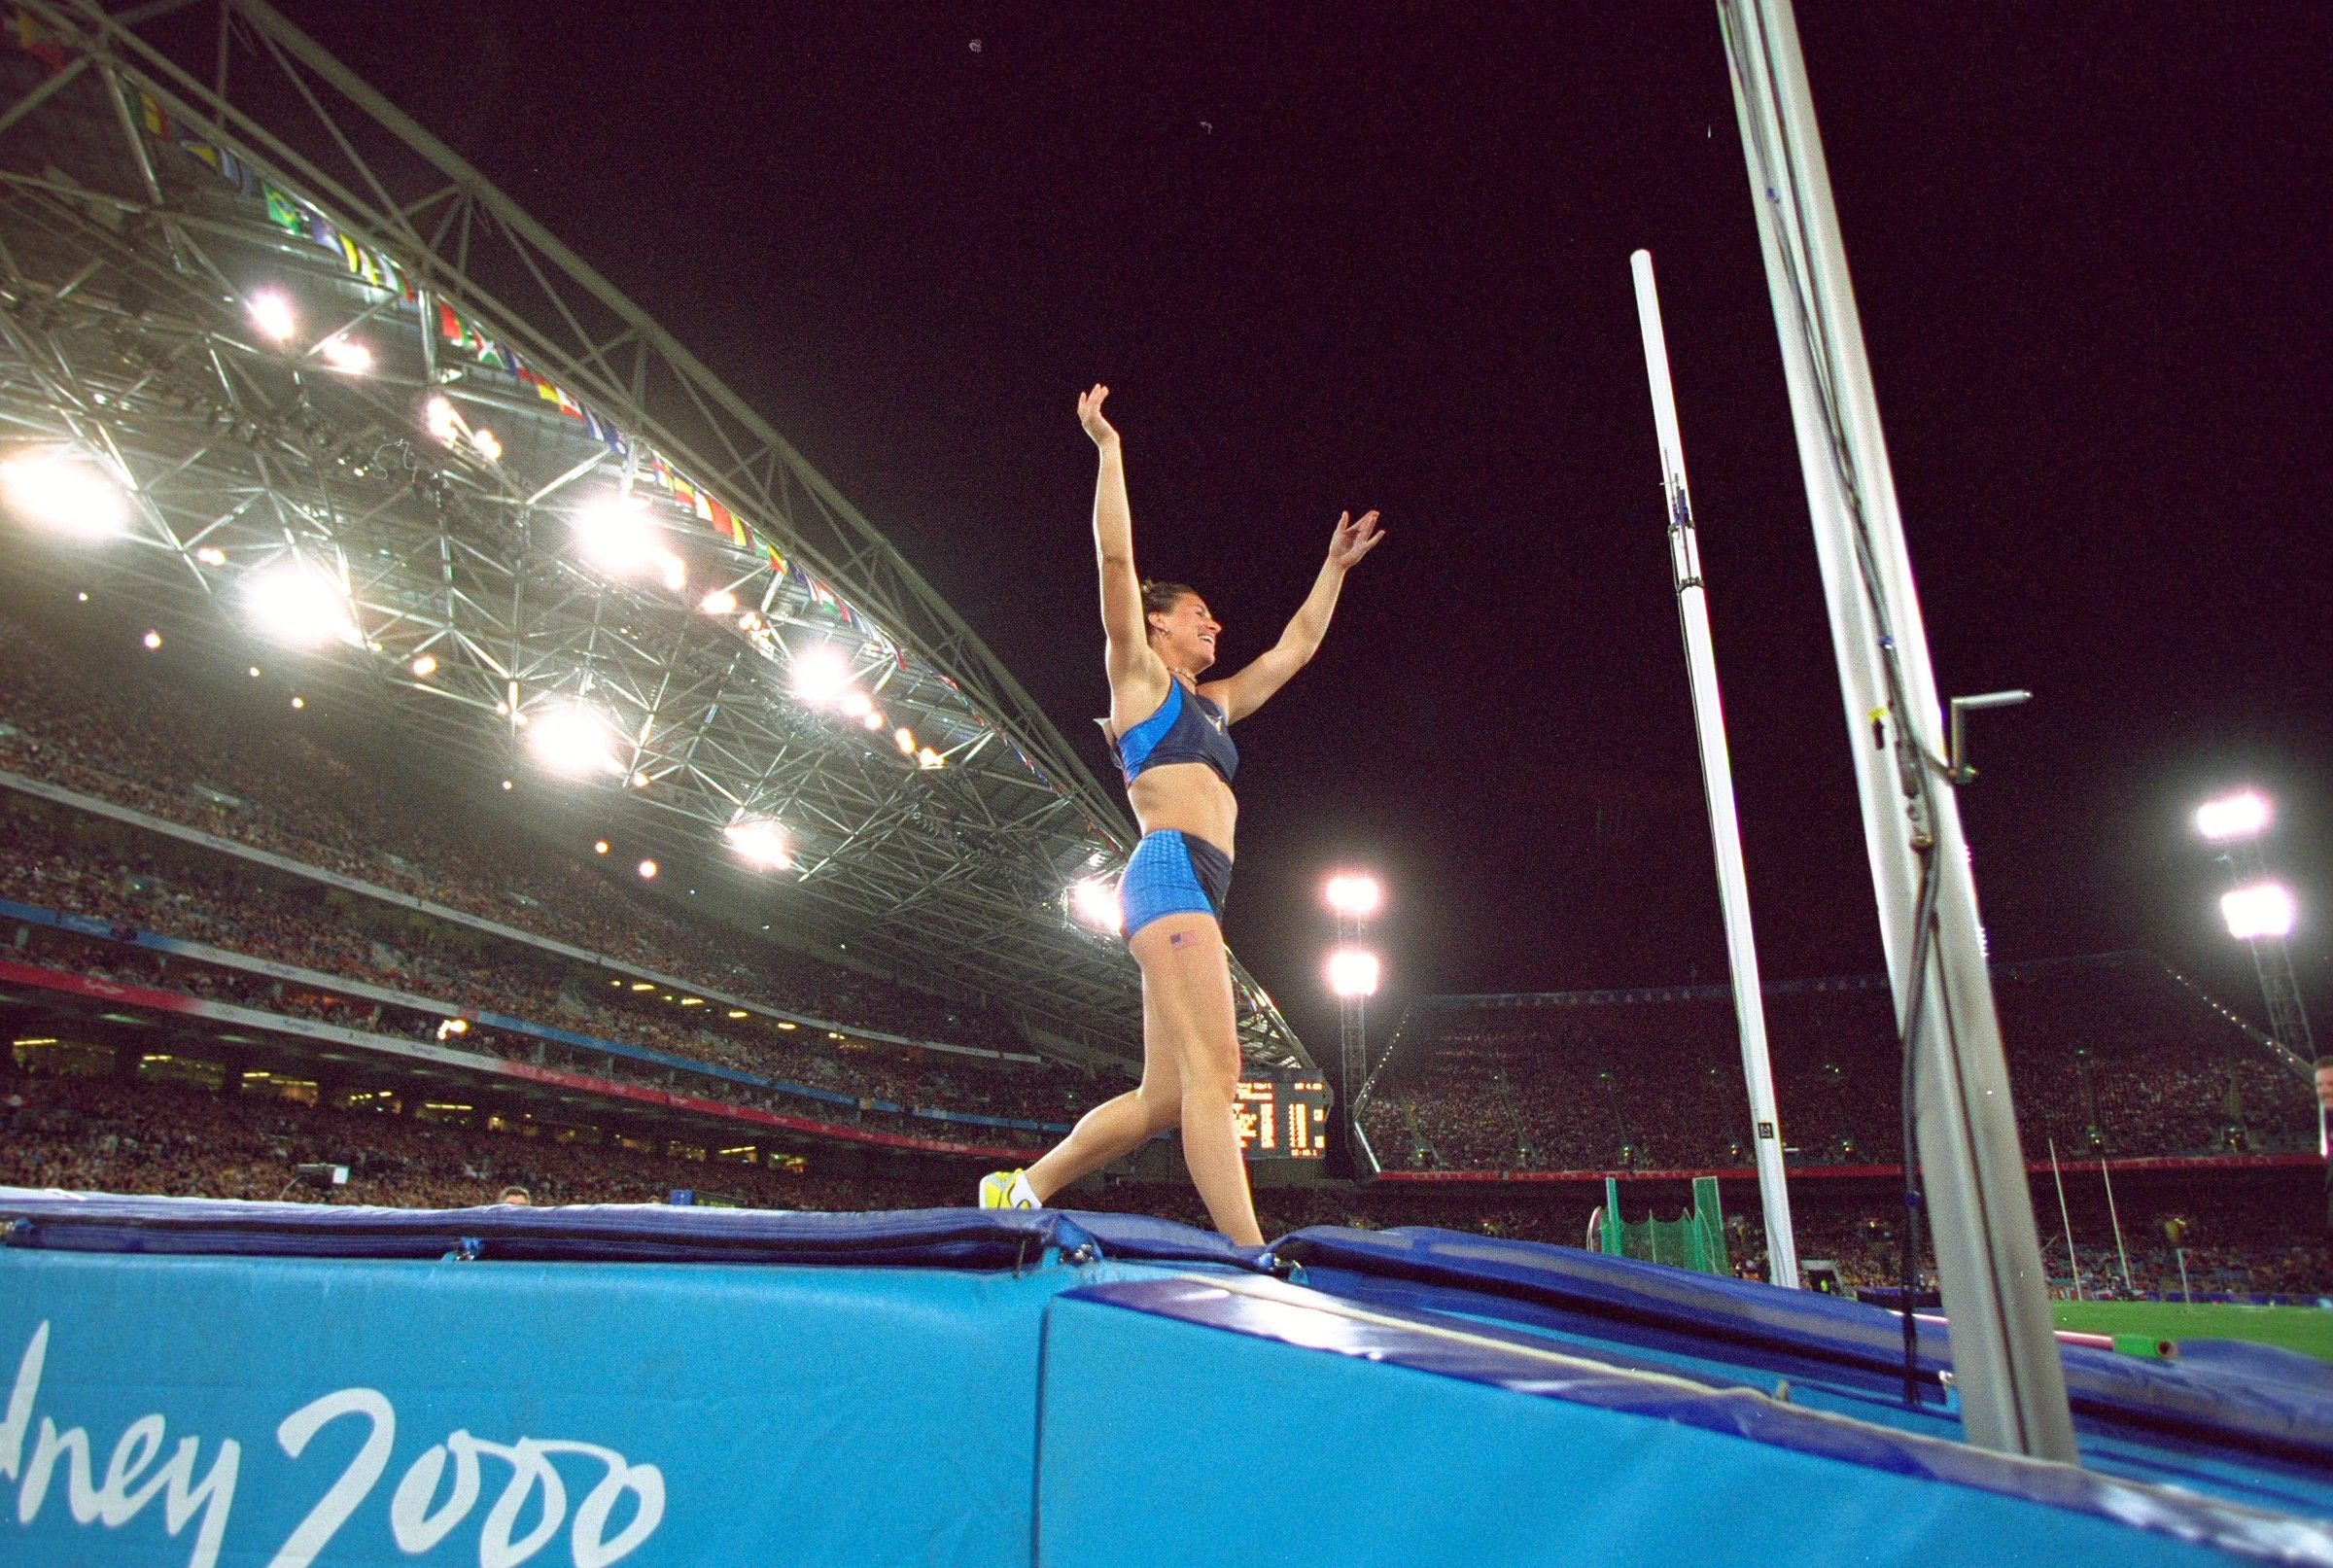 Stacy Dragila celebrates her win at the 2000 Olympics